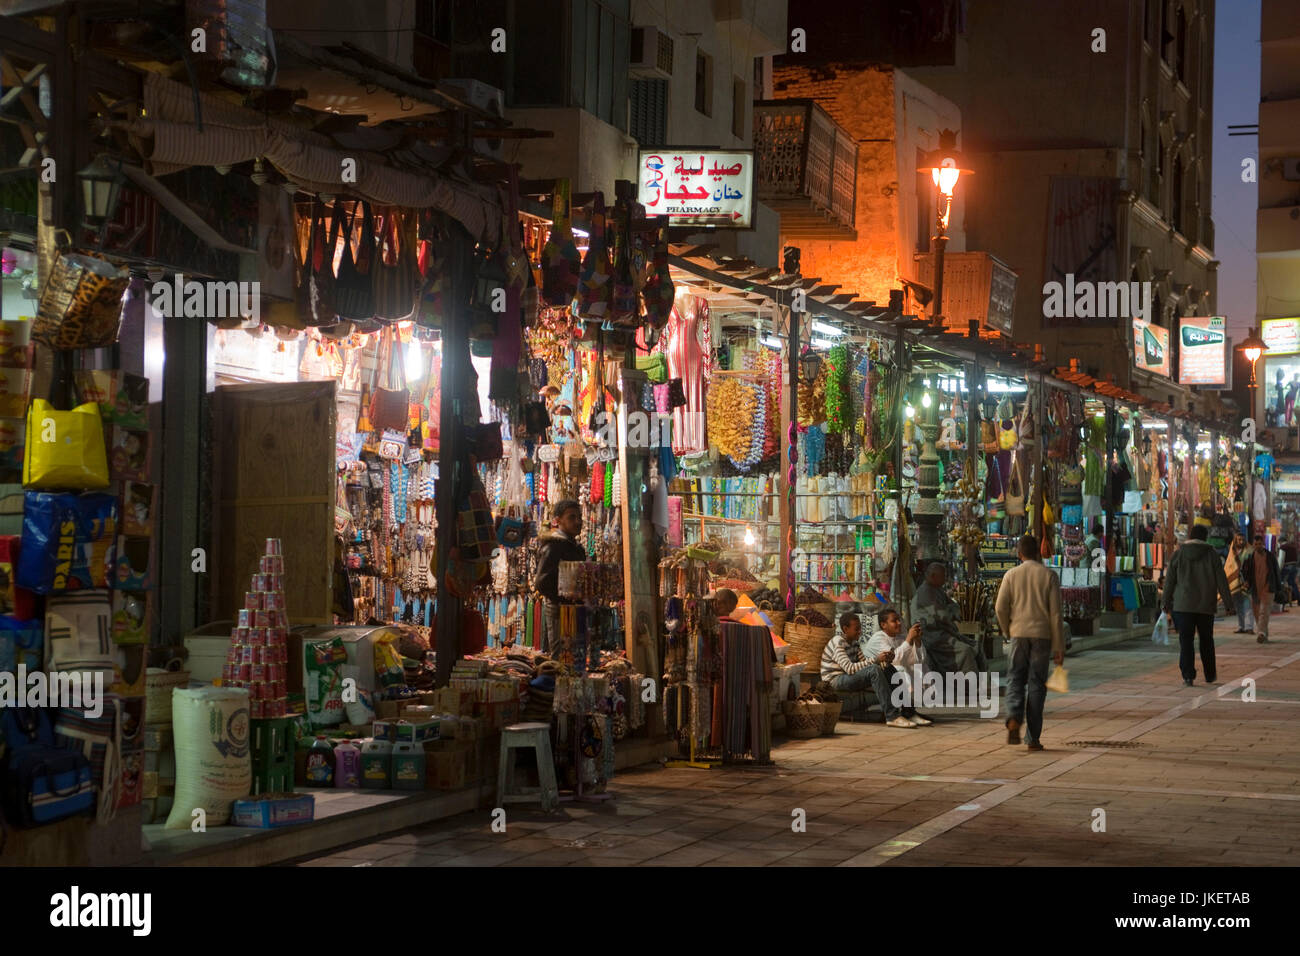 Aegypten, Assuan, Im Souk Stockfoto